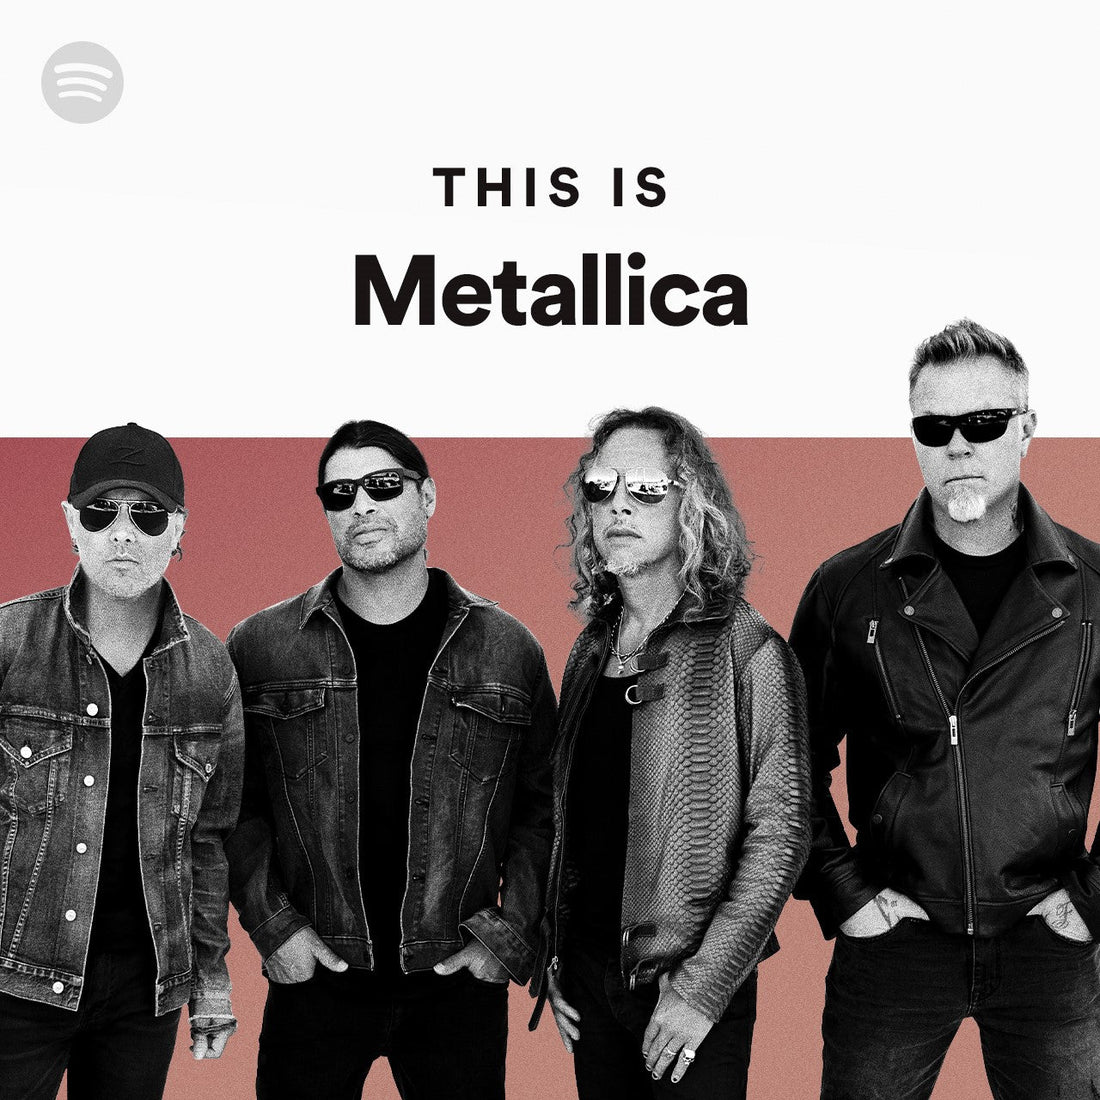 Metallica's 'Enter Sandman' hits 1 billion plays on Spotify Official Merchandise Store